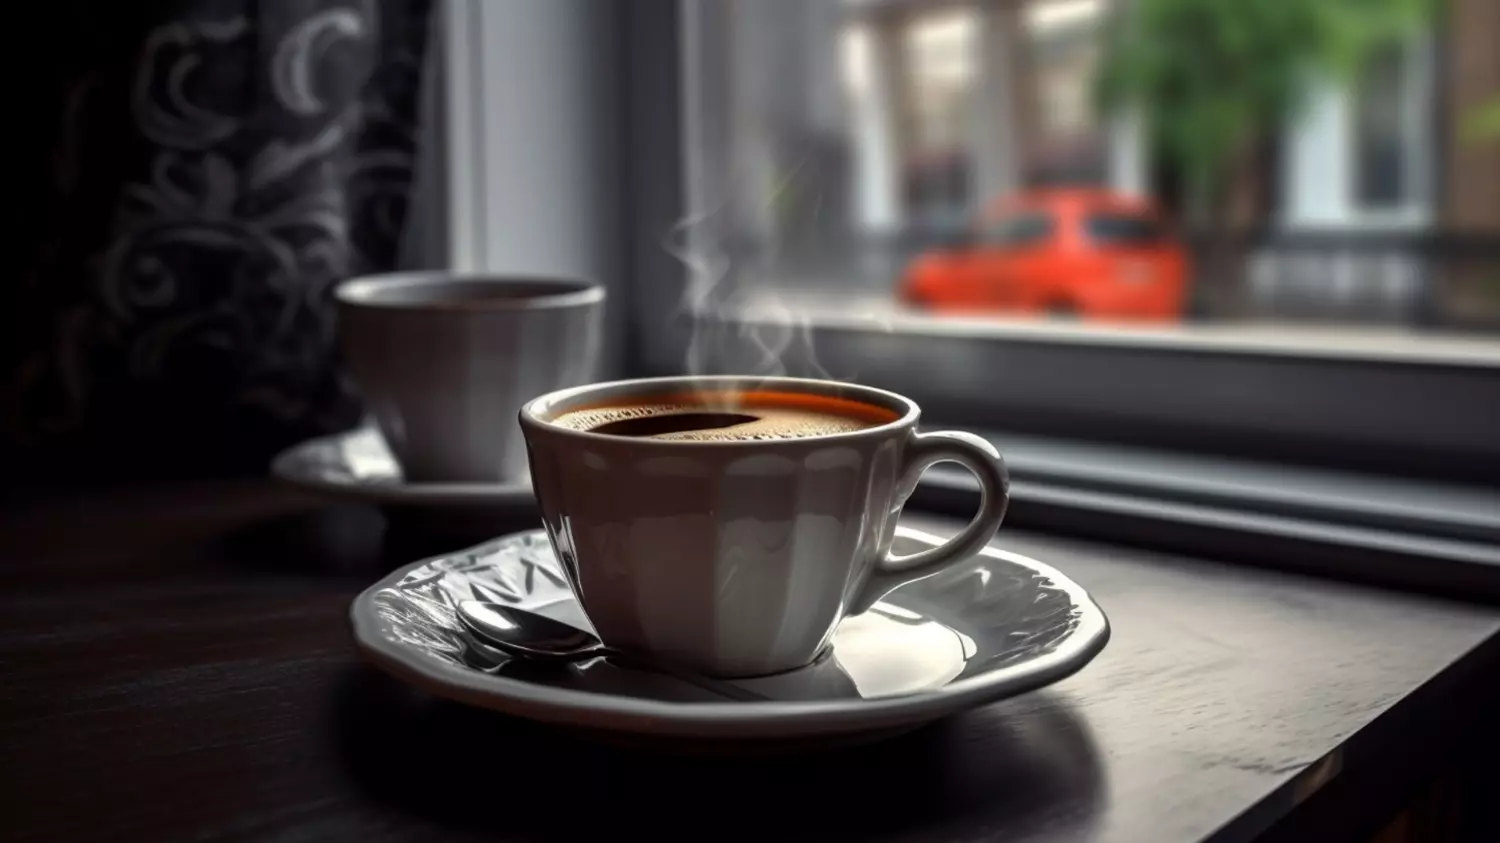 В 2018 году Аяз Шабутдинов продал свою долю в компании Coffee Like за 151 млн рублей